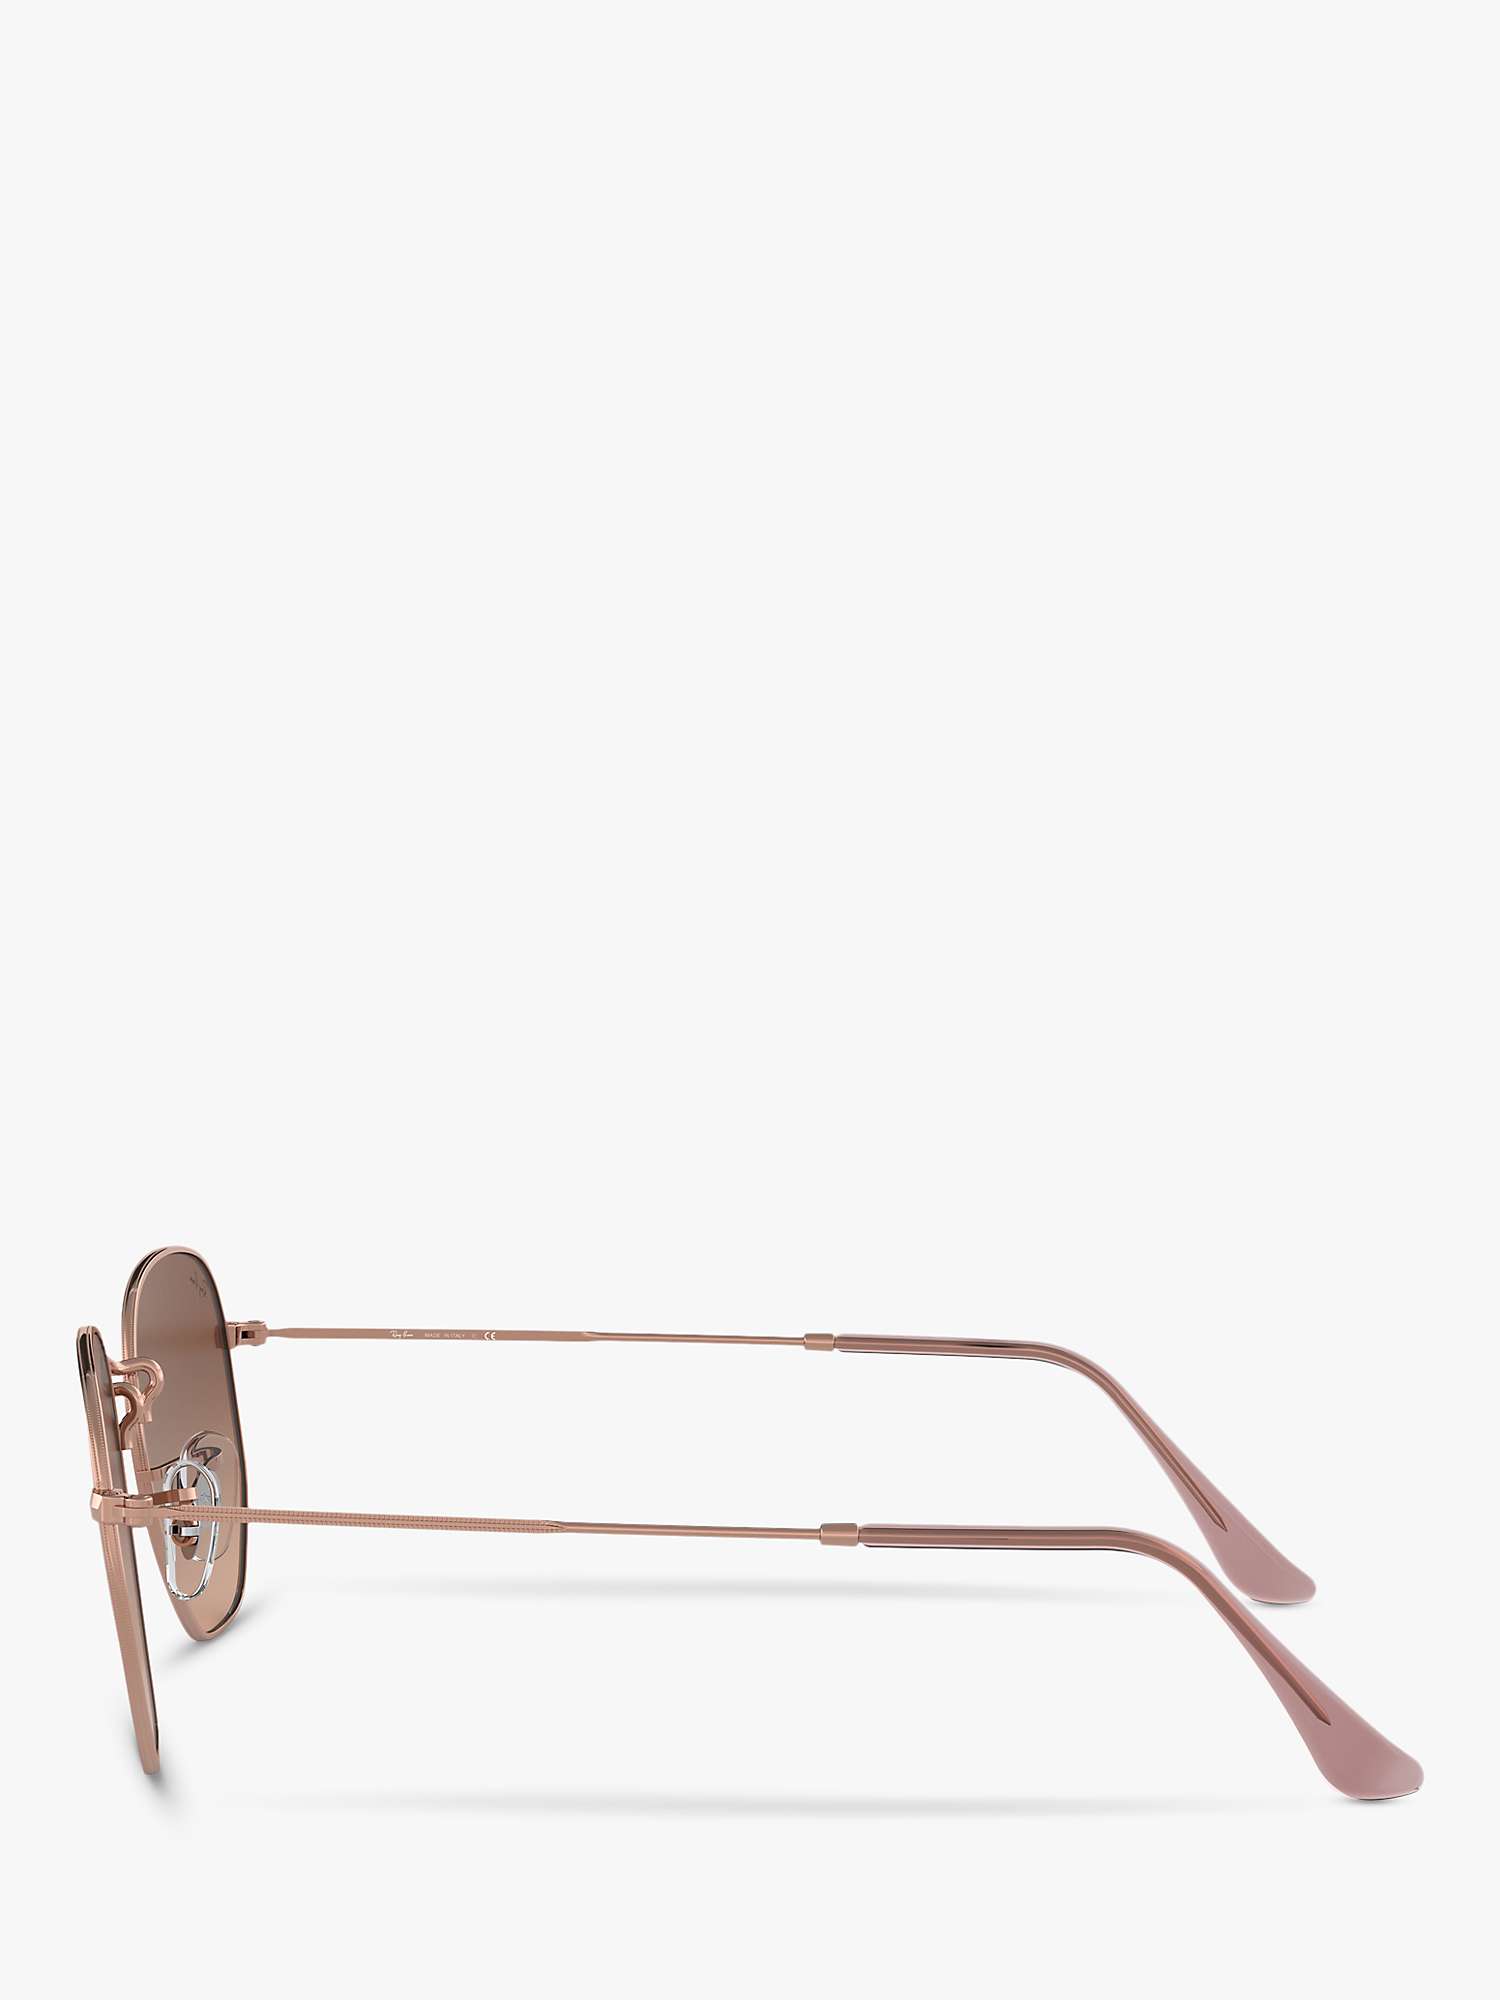 Buy Ray-Ban RB3548N Unisex Hexagonal Sunglasses, Copper/Brown Gradient Online at johnlewis.com